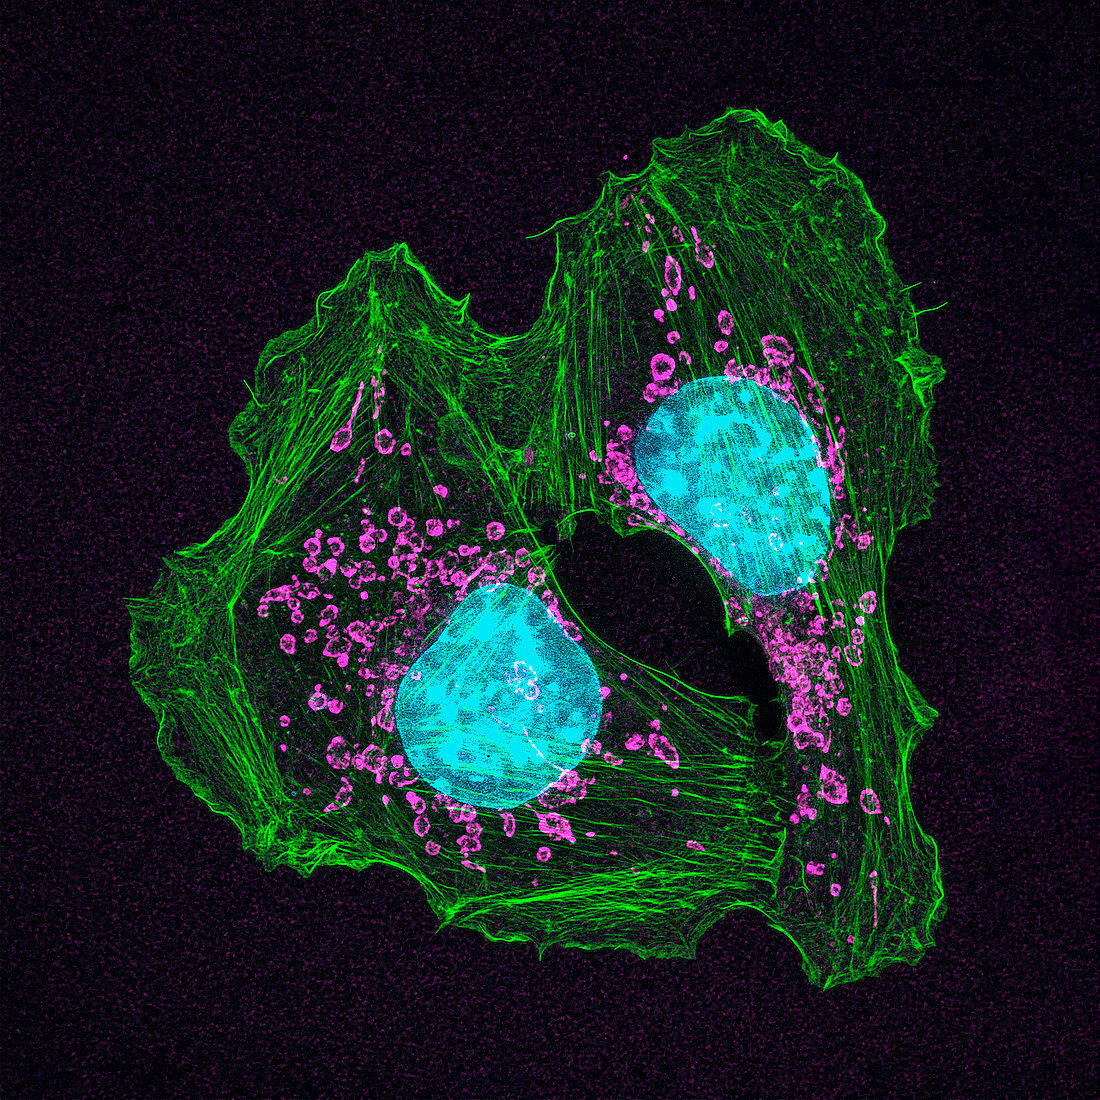 Skin cancer cells, light micrograph